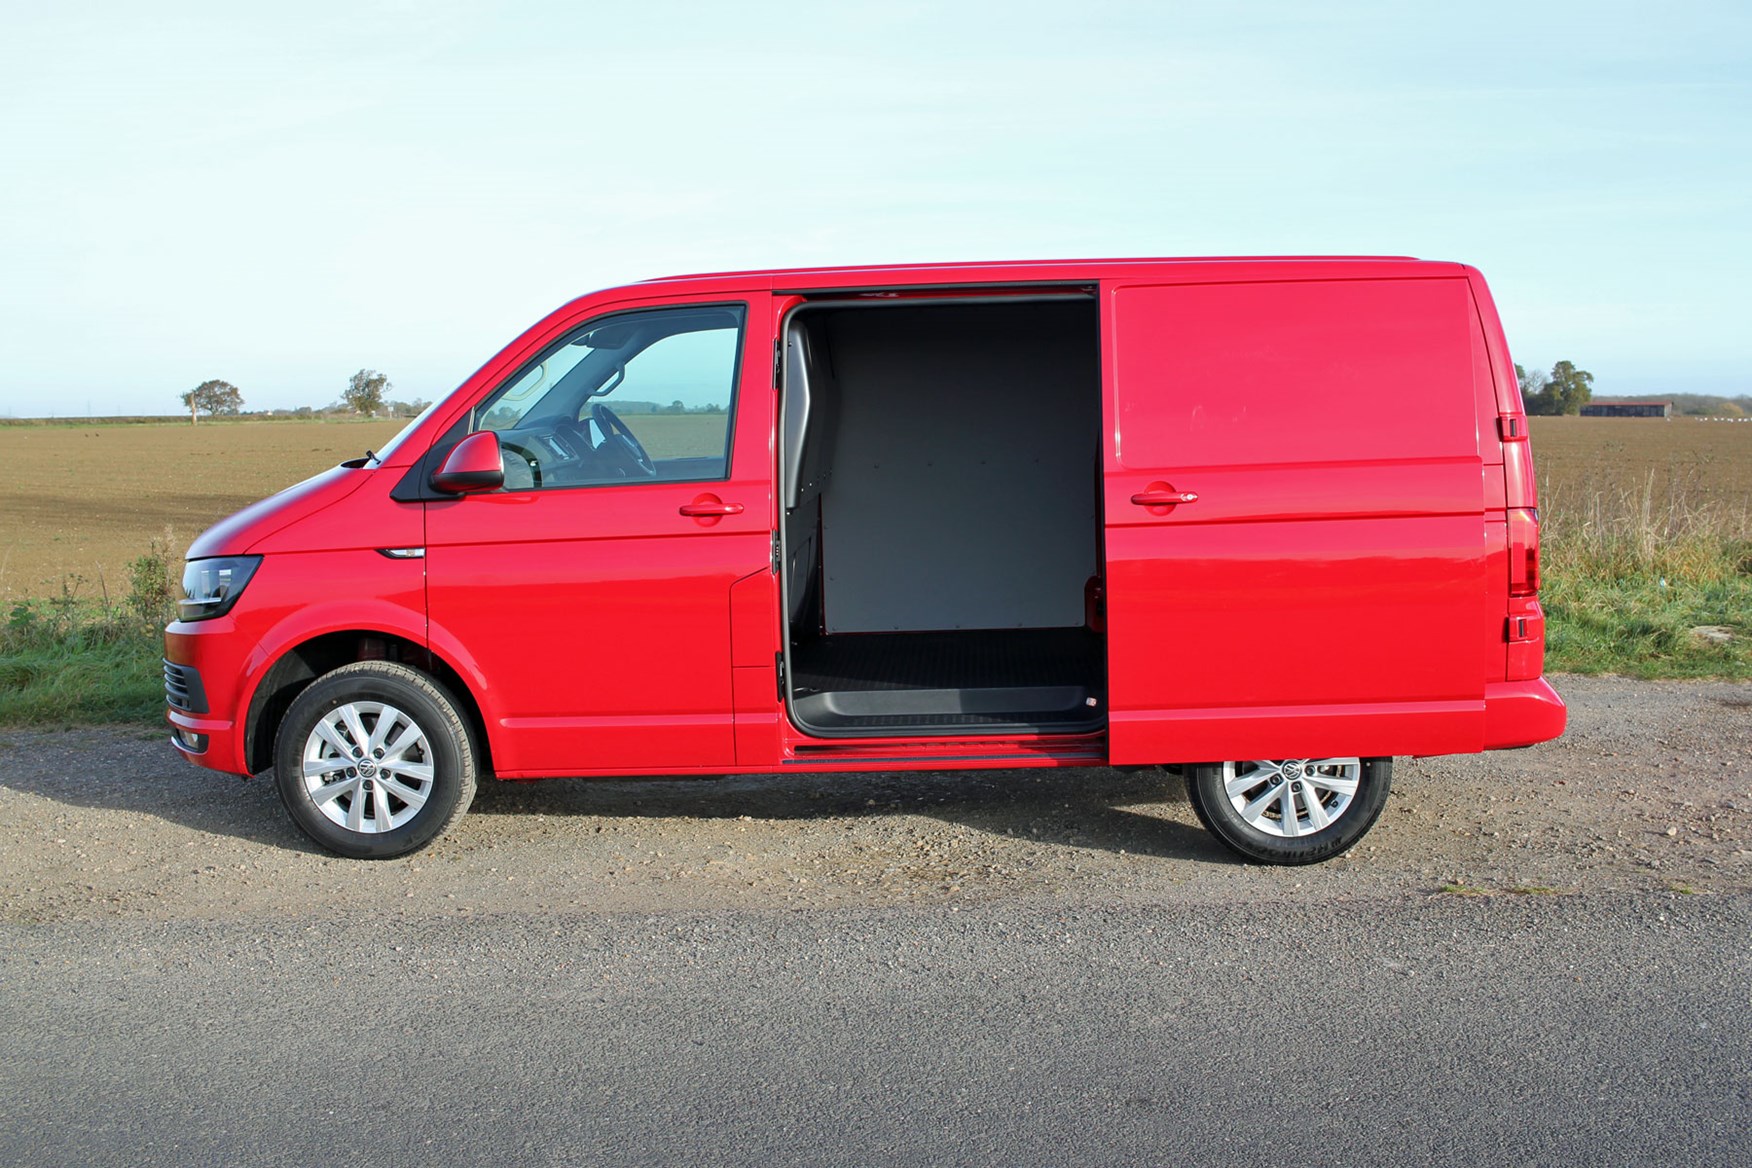 VW Transporter T6 TSI 150 review - side view, sliding door open, red